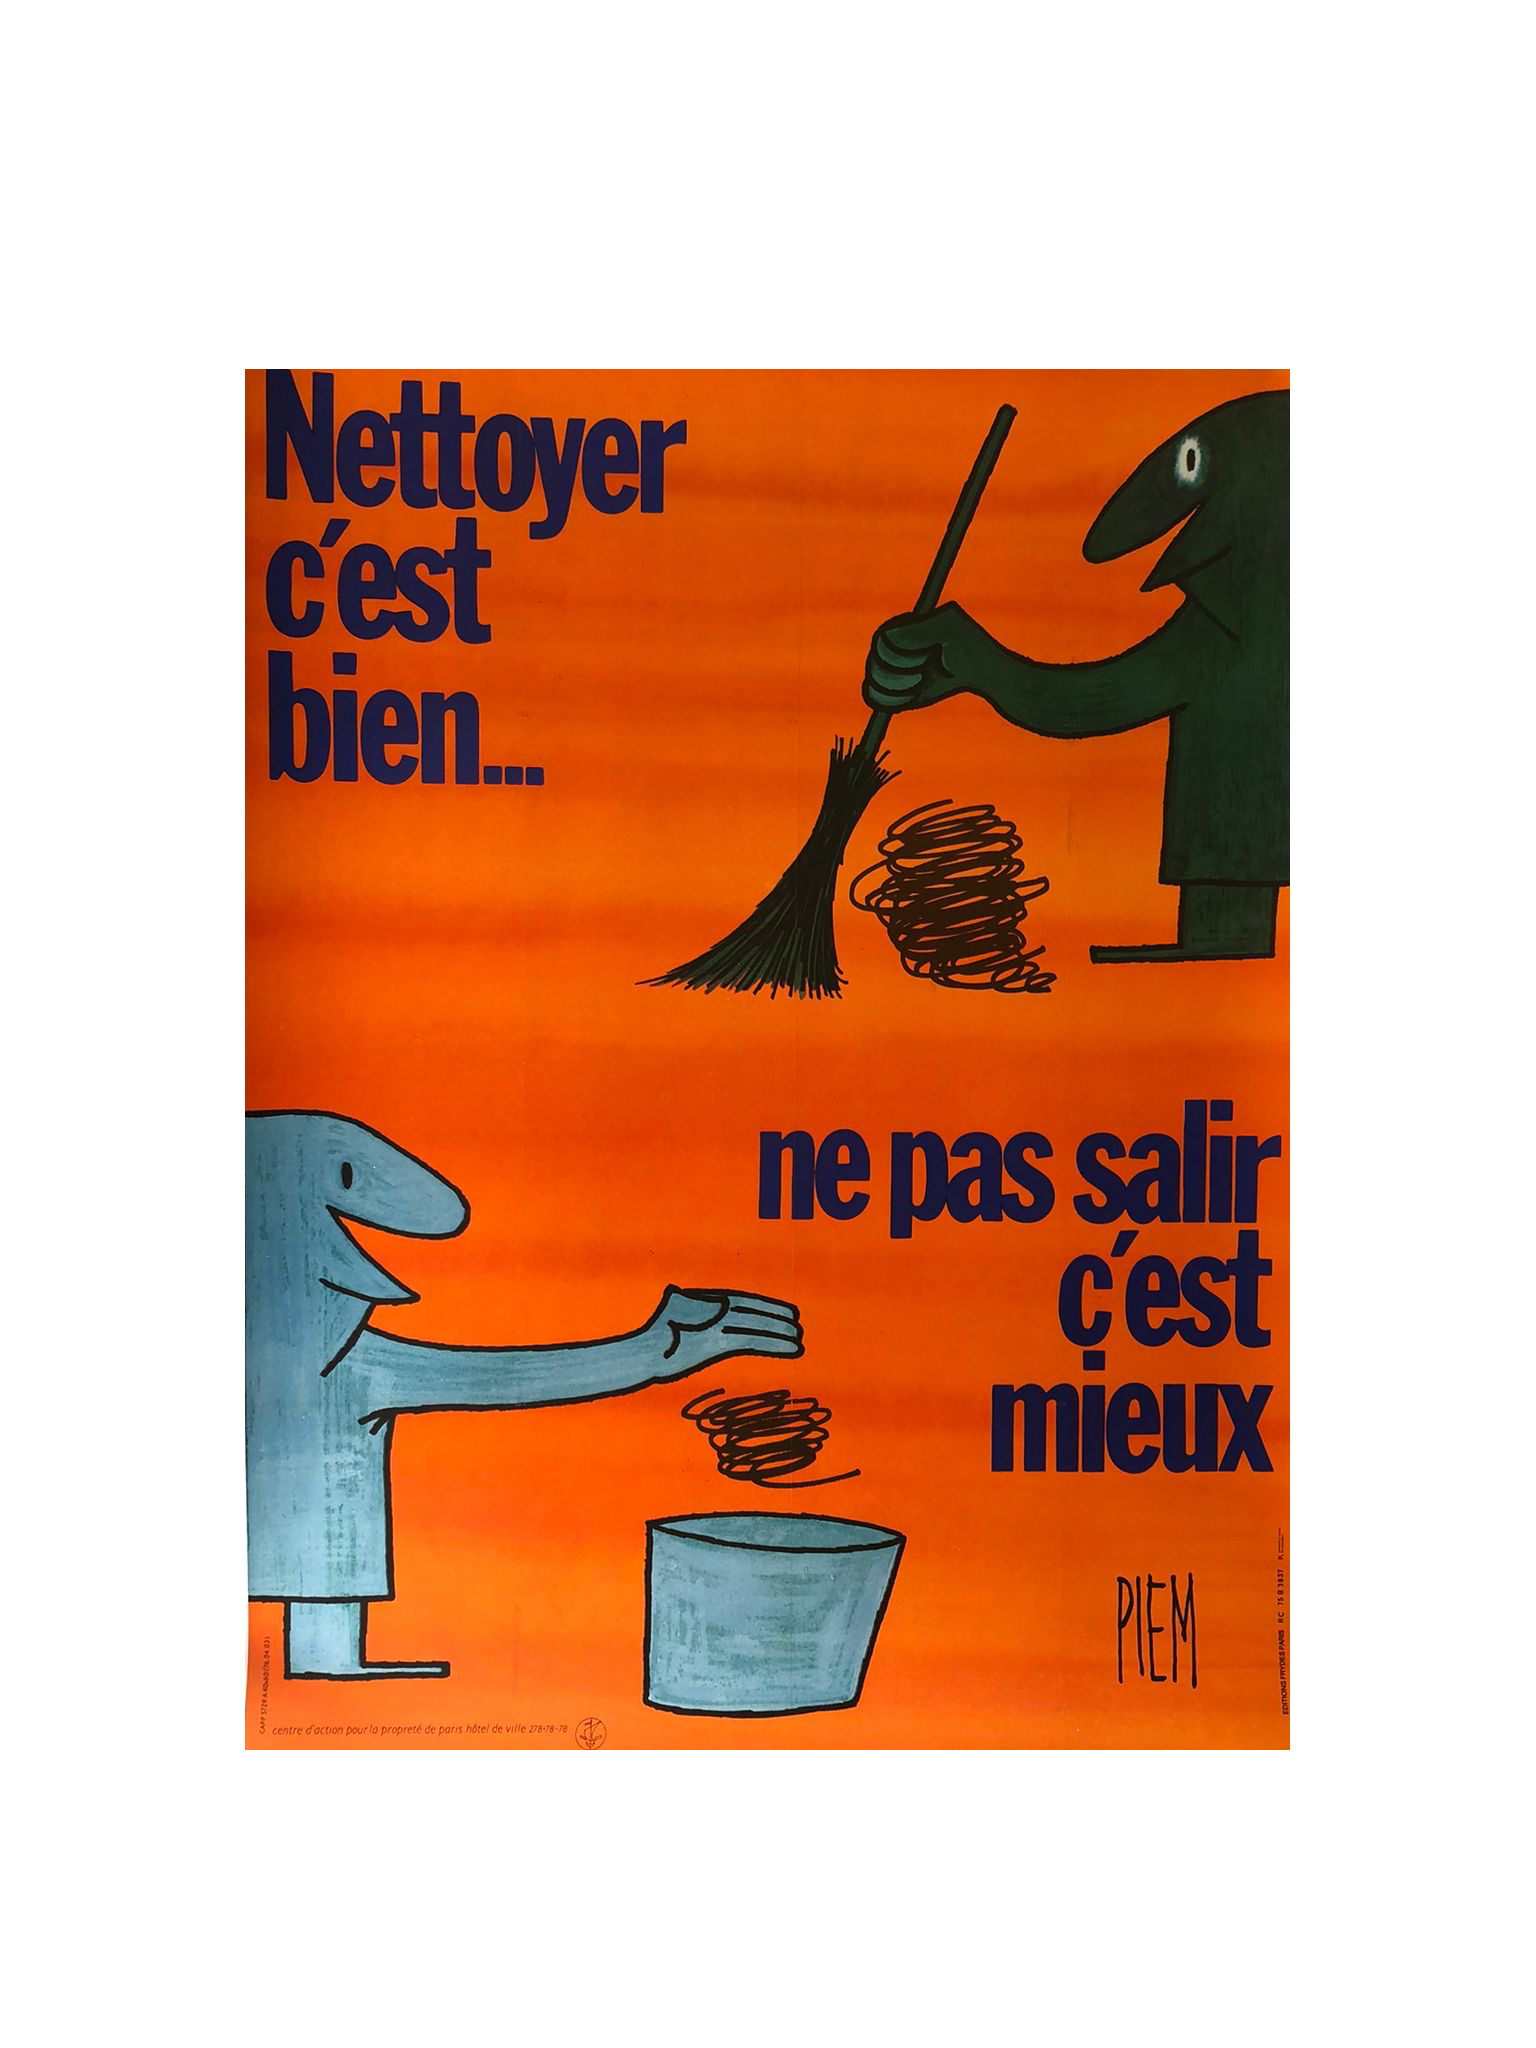 Nettoyer C'est Bien by Piem